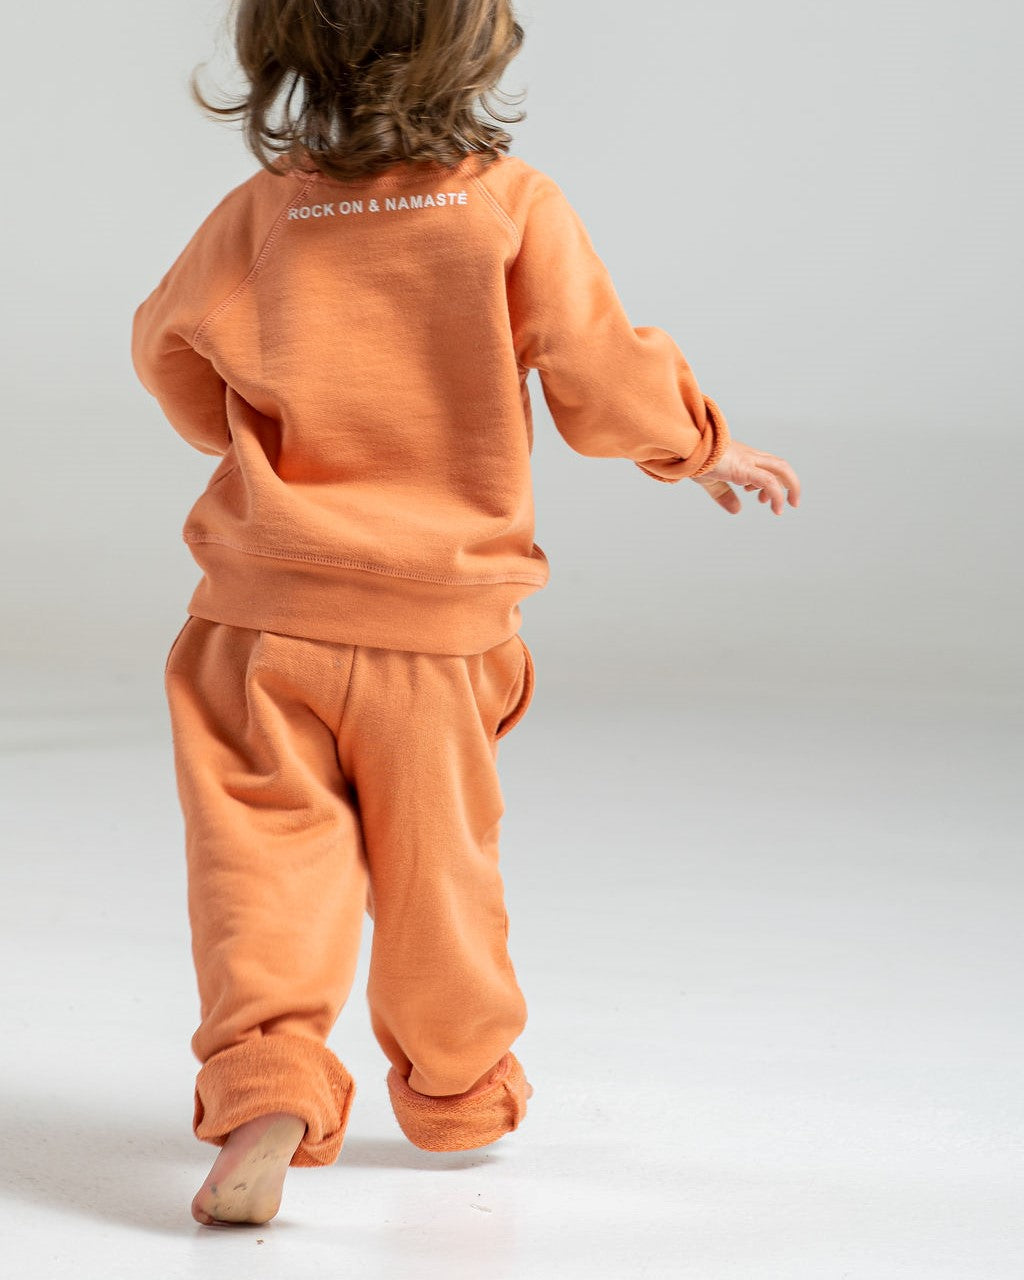 HOPE Sweatshirt Kids - Orange